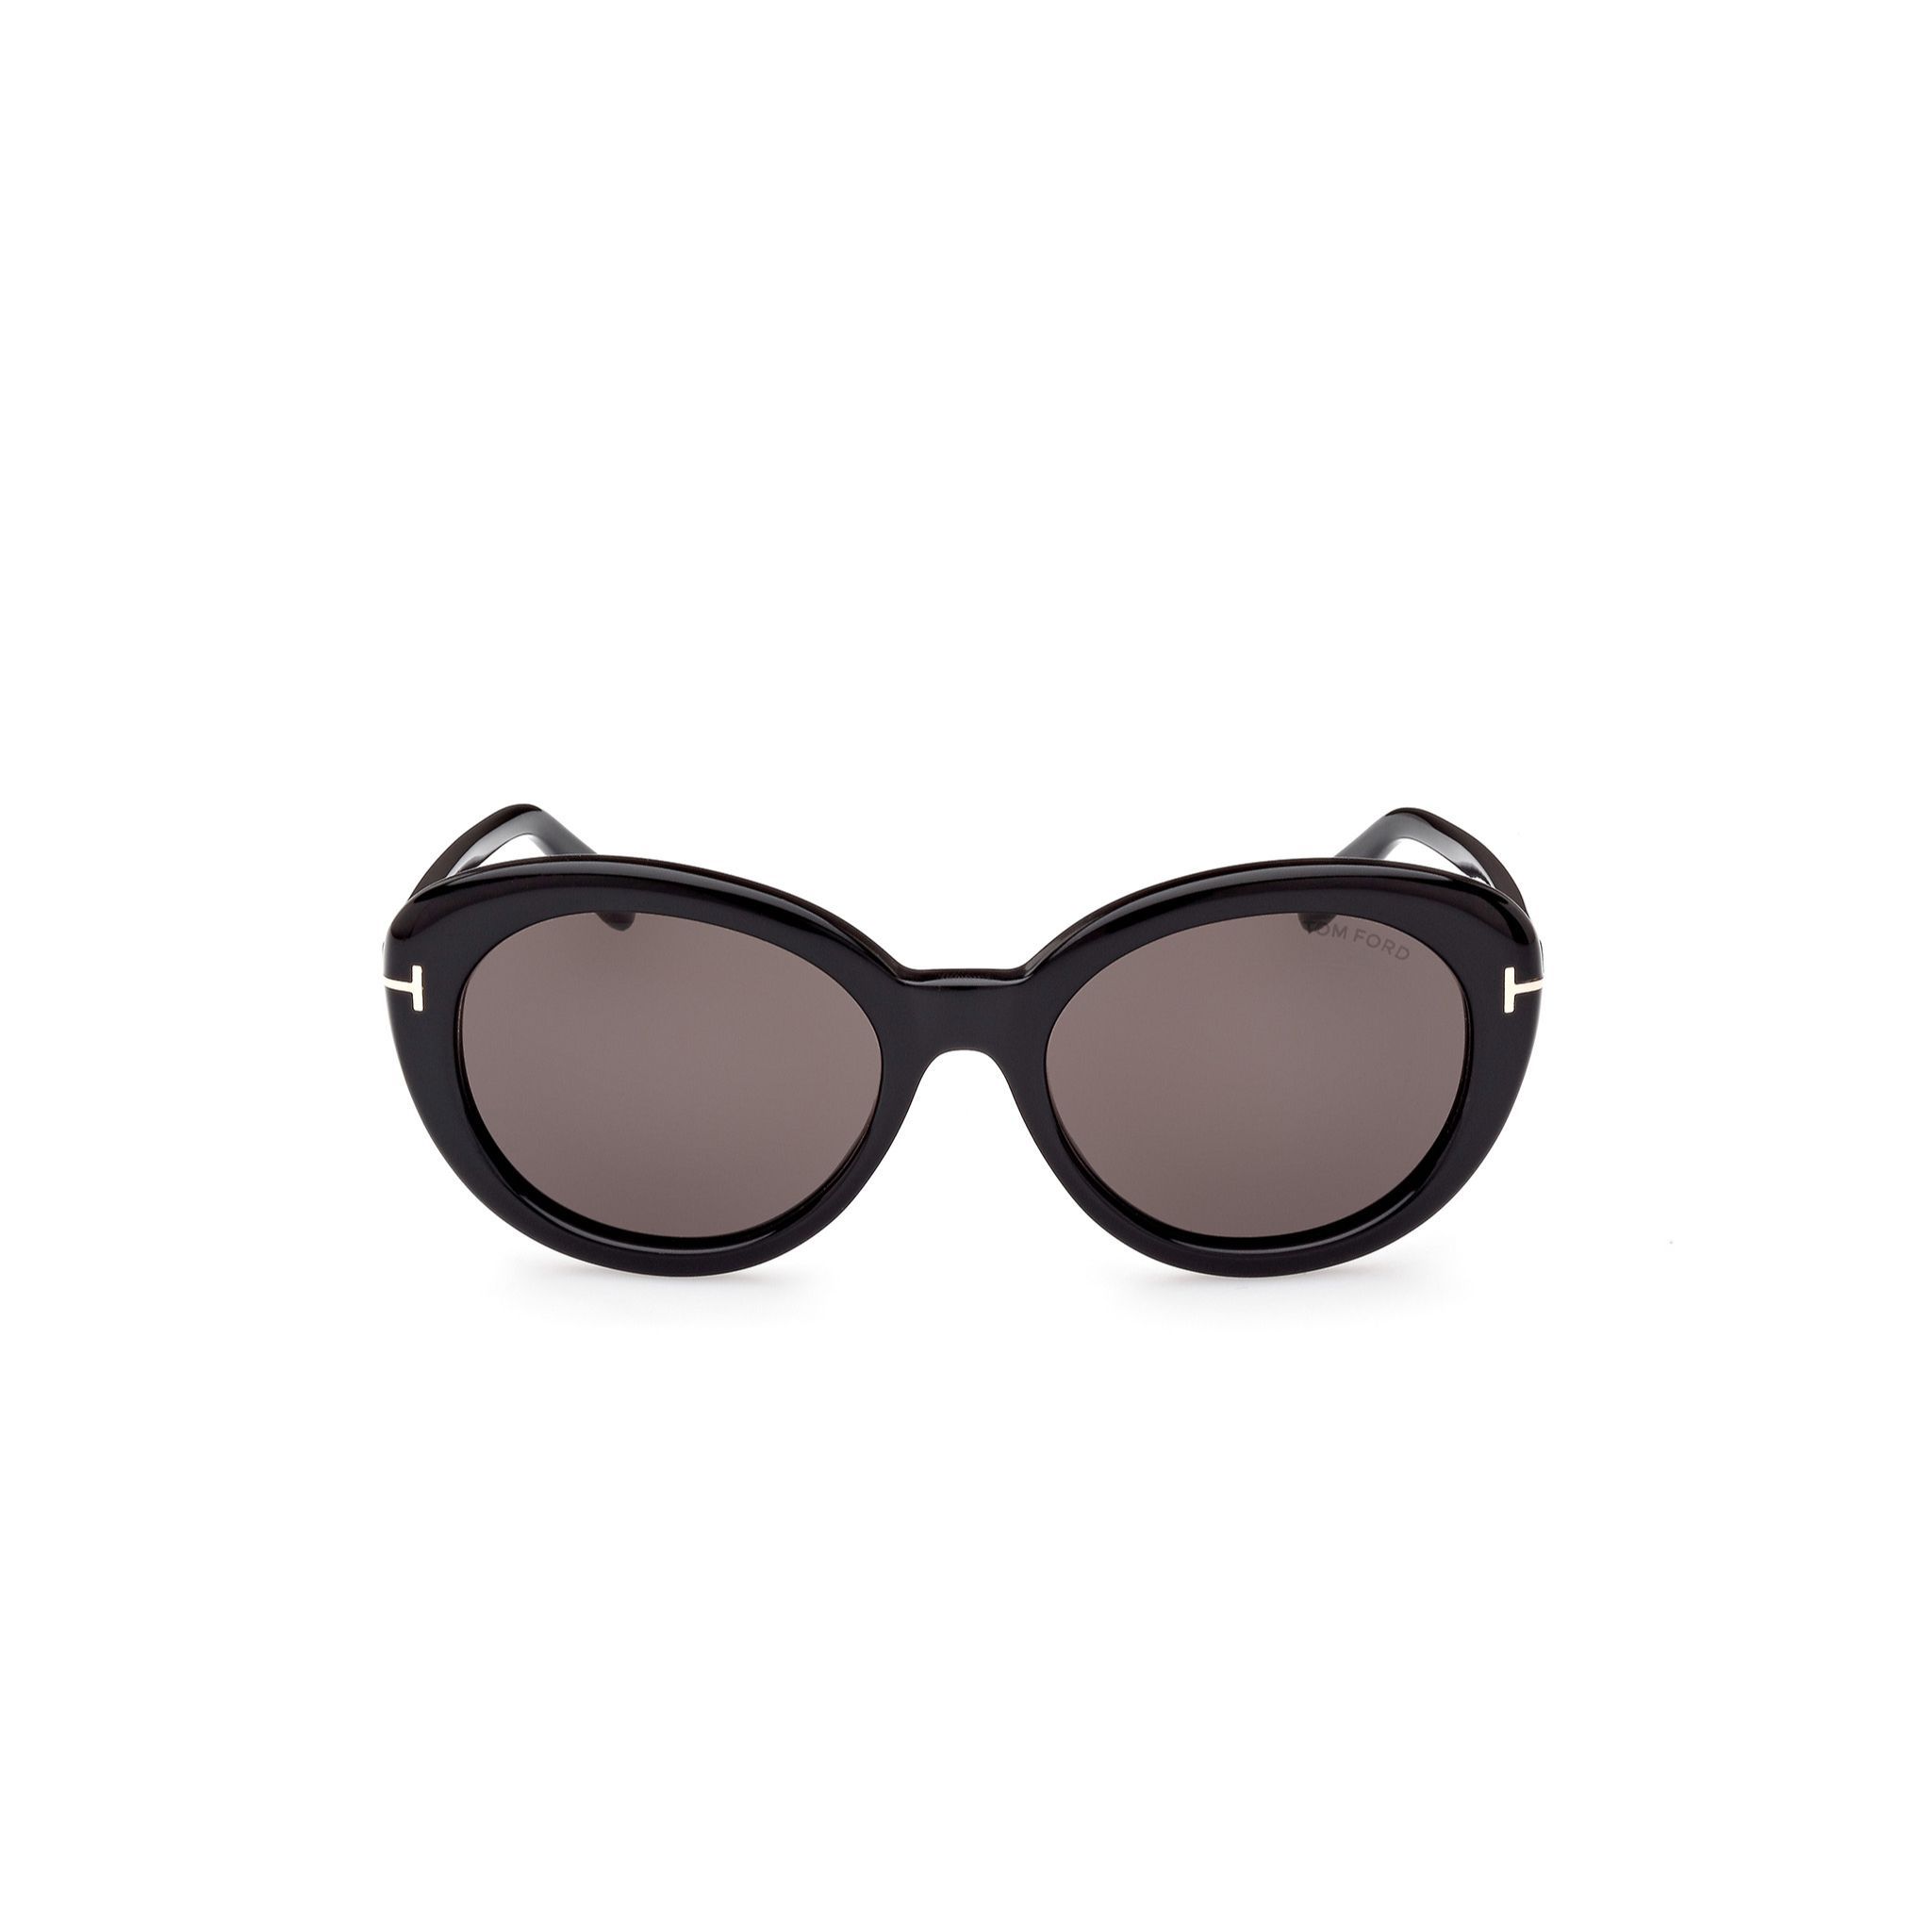 FT1009 Oval Sunglasses 01A - size 55